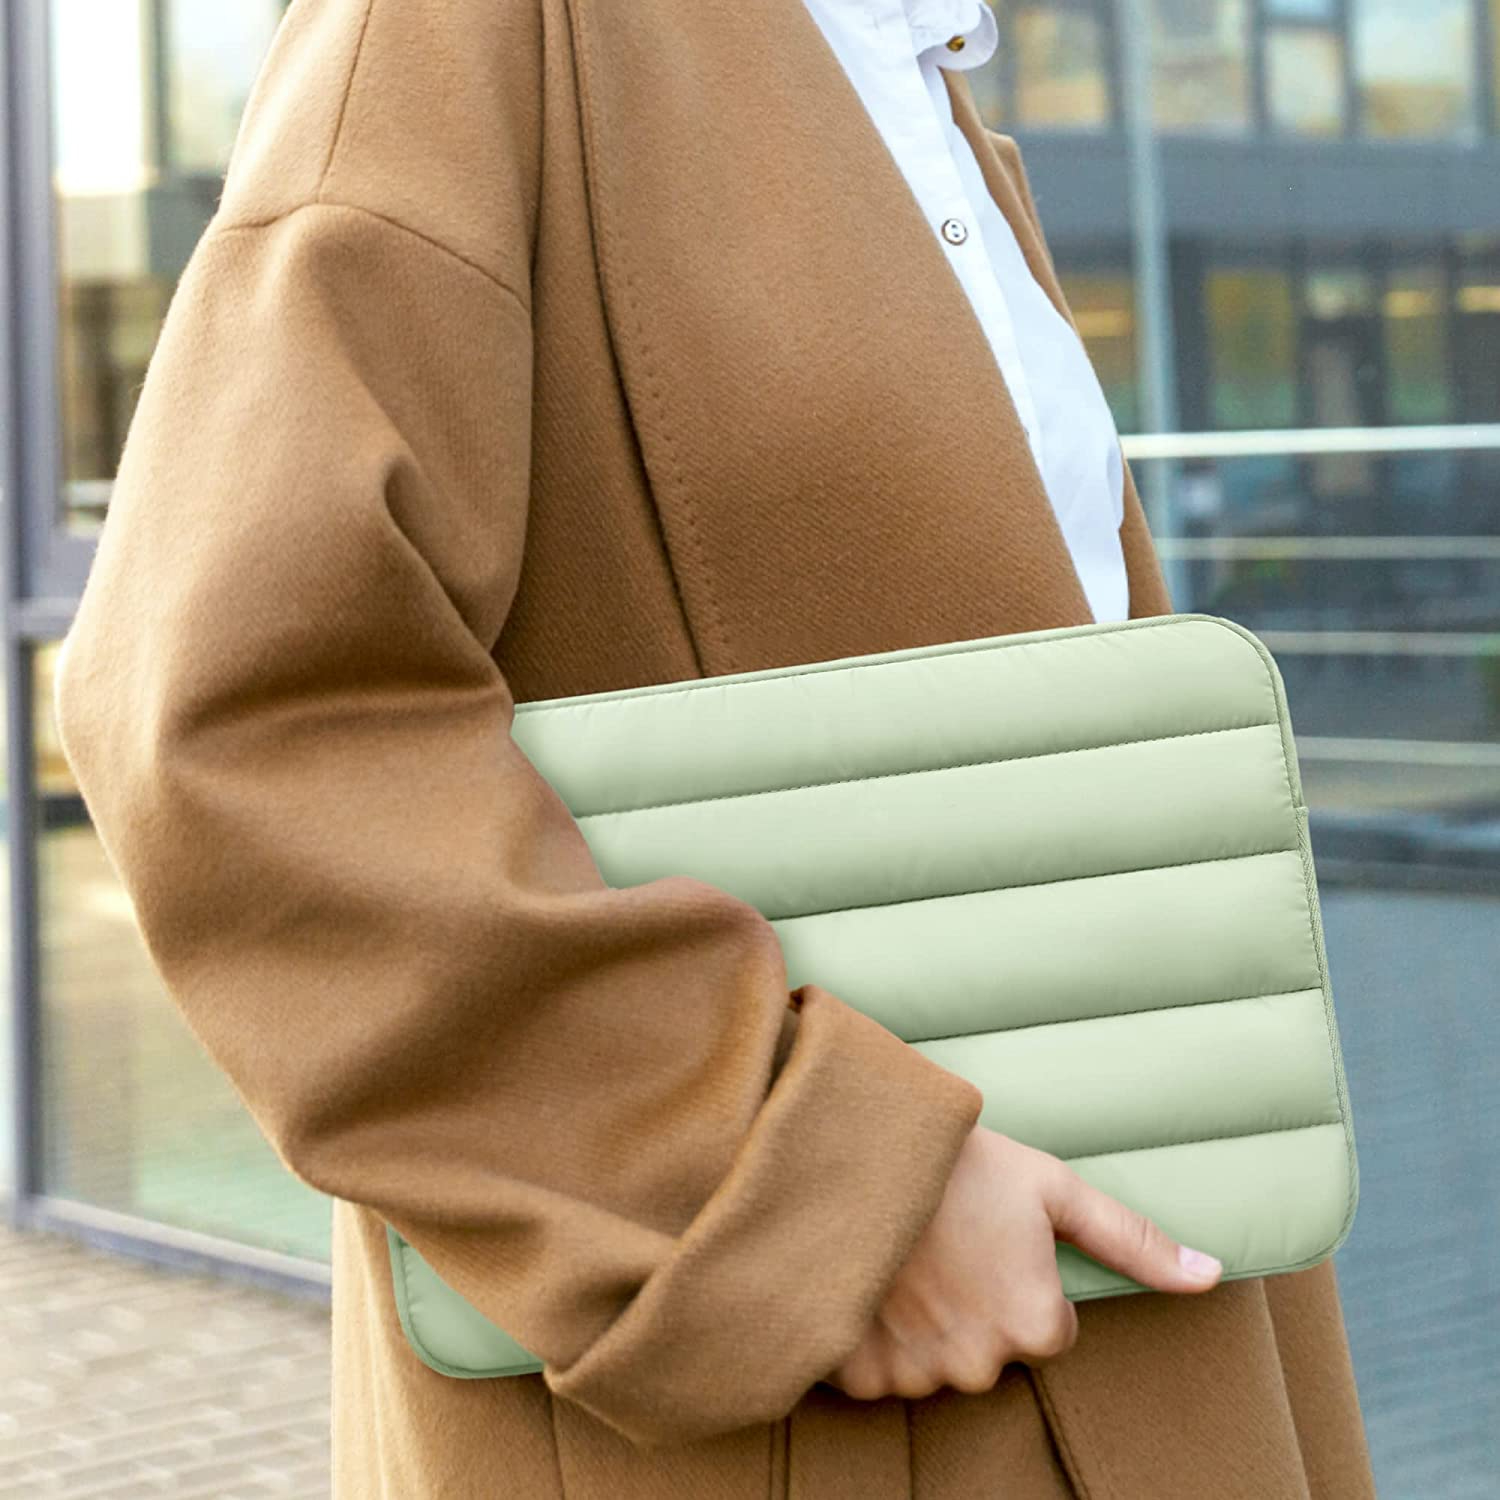 A puffy mint green laptop case